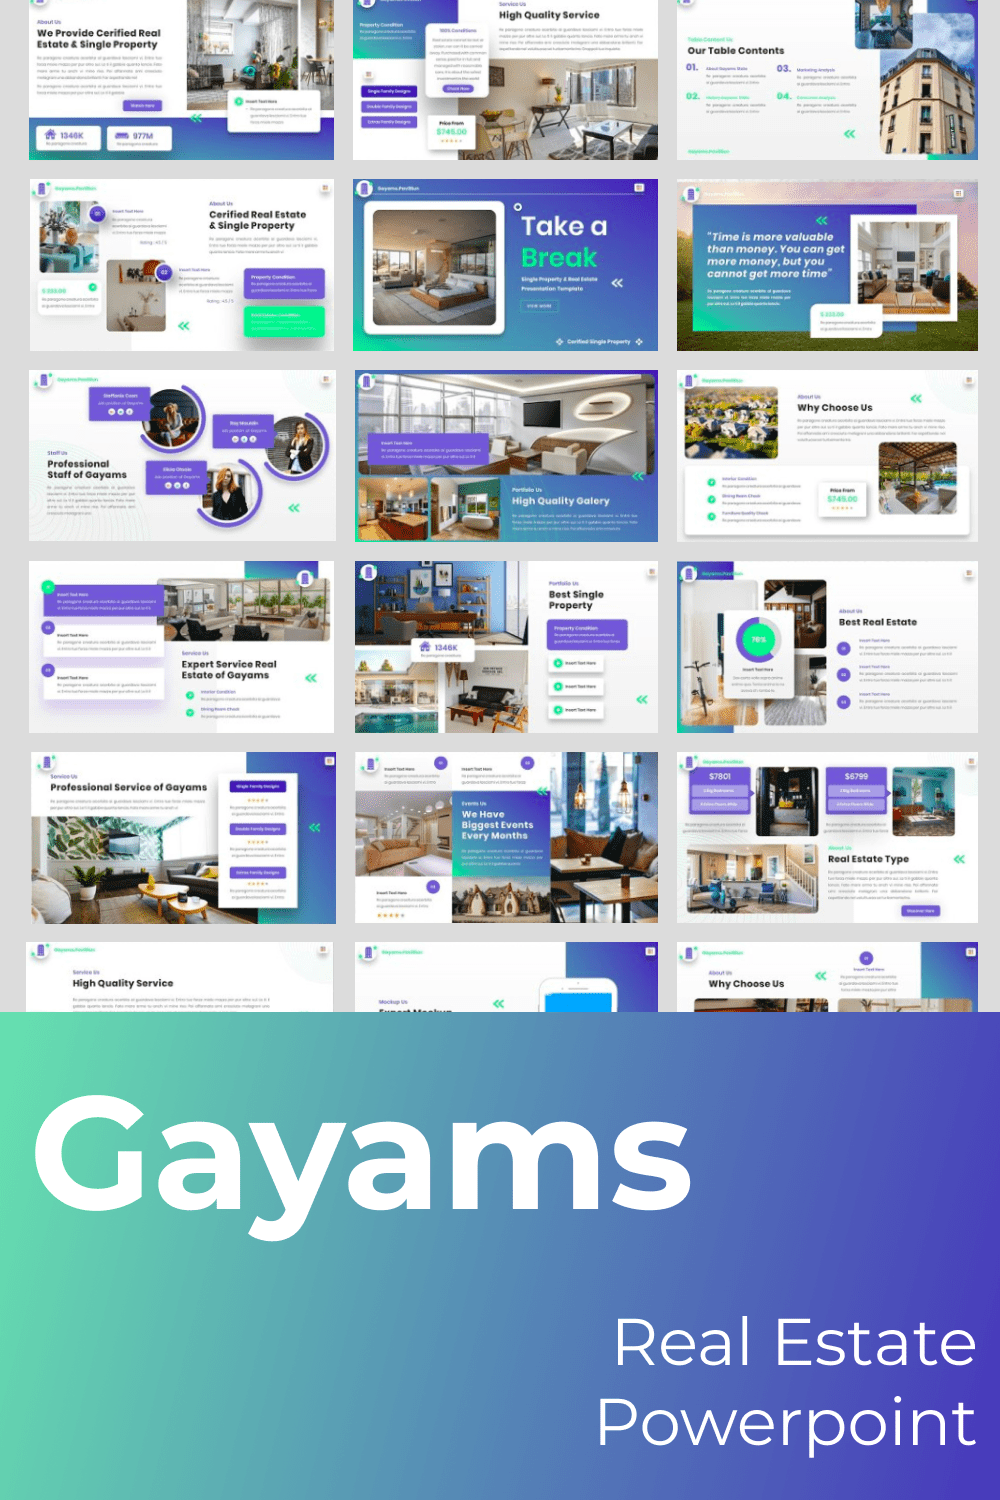 Gayams - Real Estate Powerpoint Pinterest.